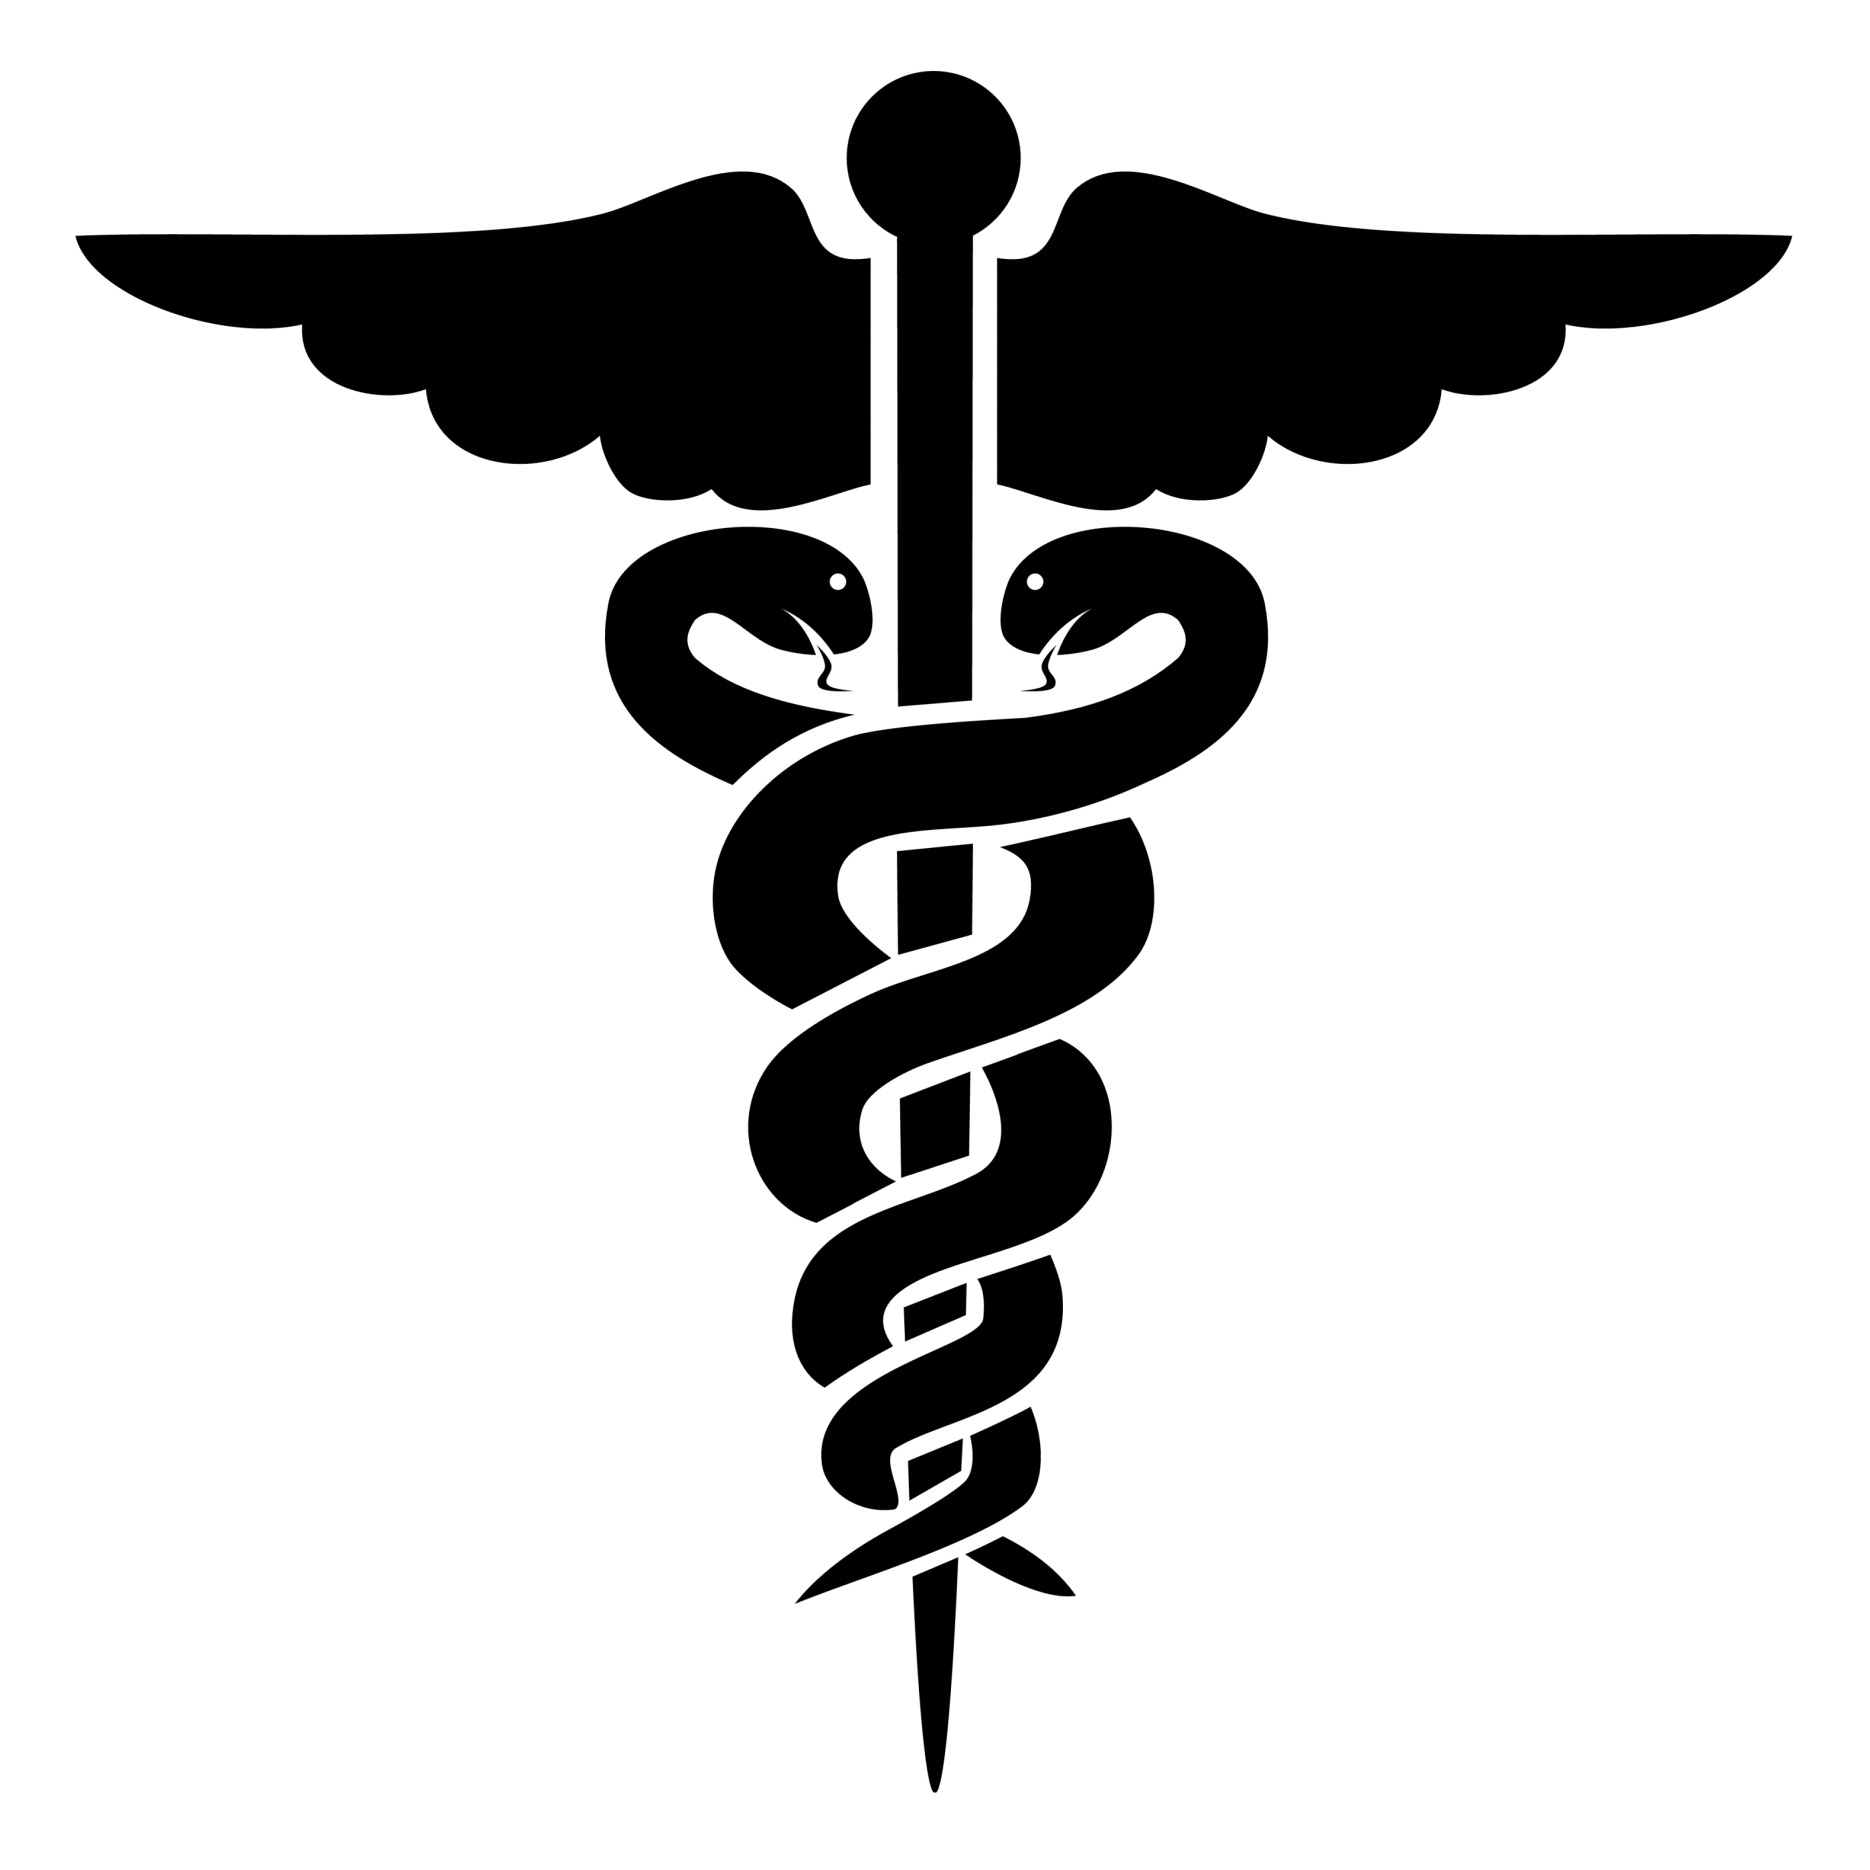 Symbole Medical Esculapius Ou Symbole Representant Un Serpent Autour D ...